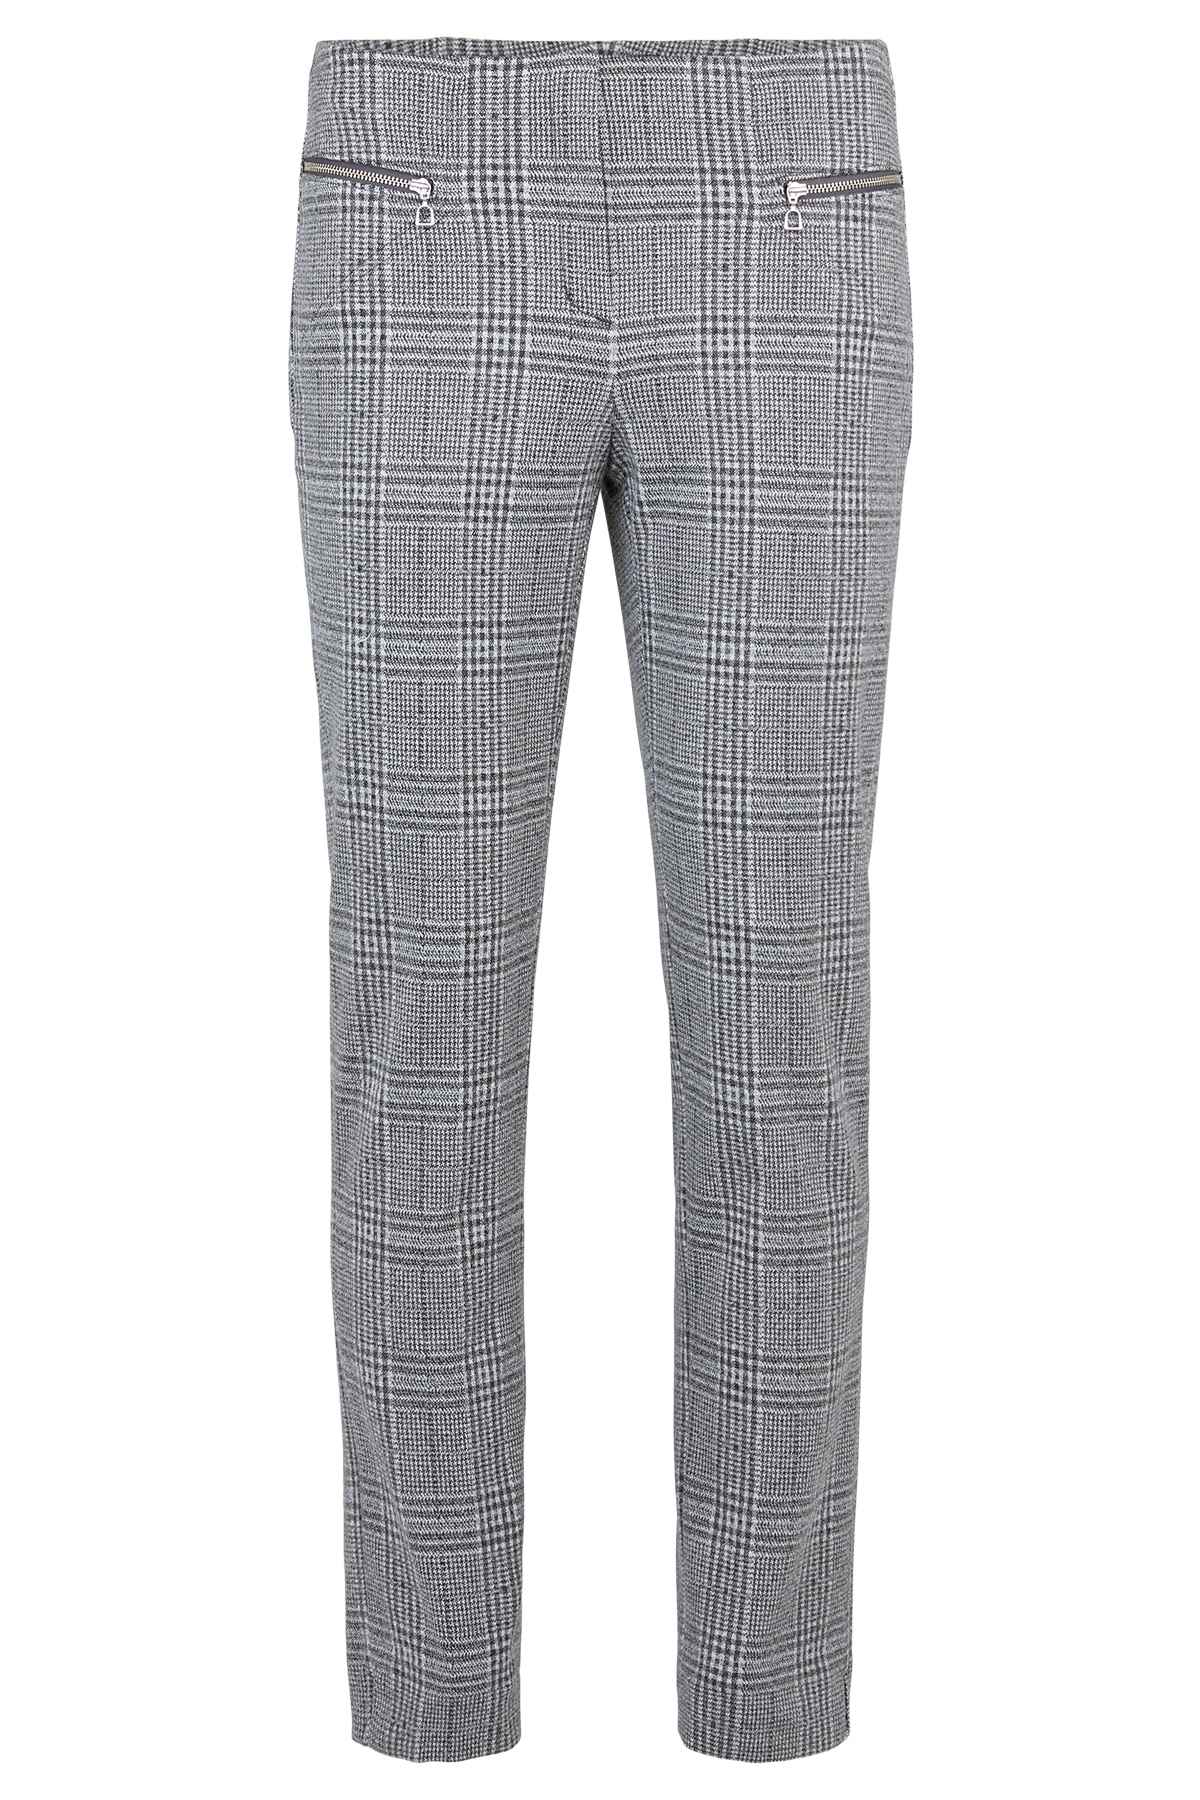 Robell Mimi Silver Grey & White 75cm Trousers